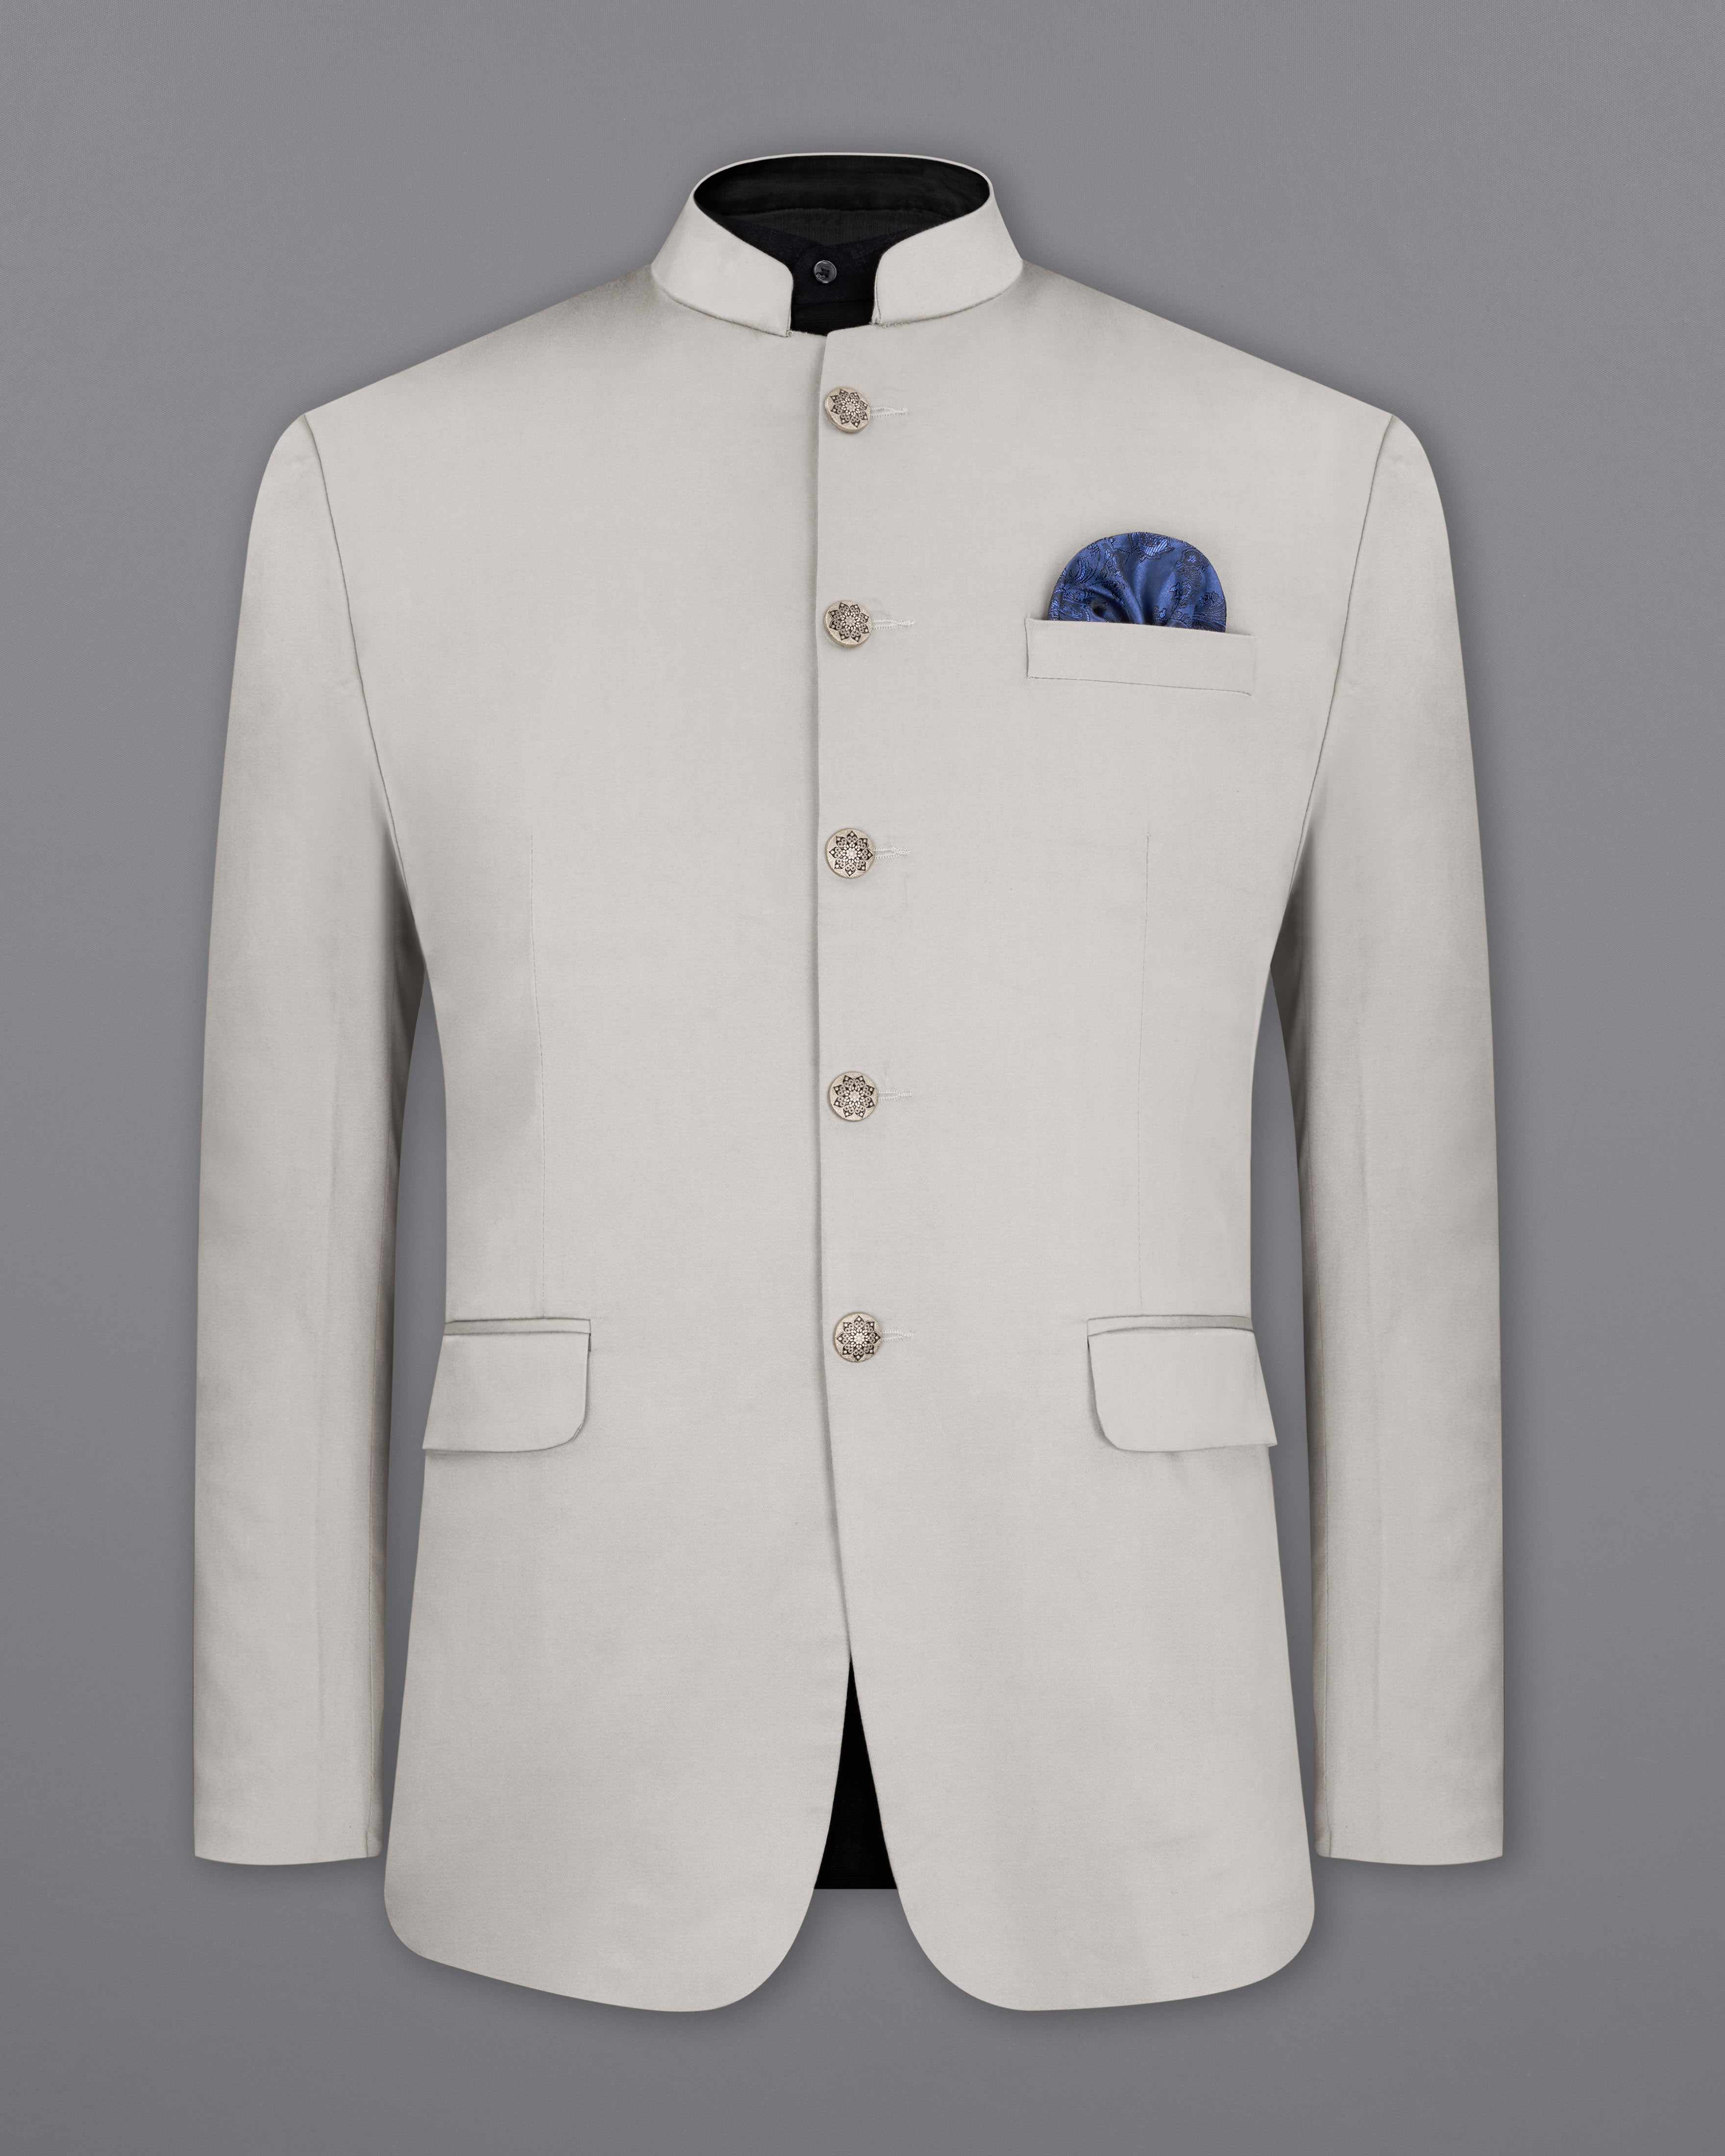 jodhpuri suit for men ethnic indian suit bandhgala mandarin collar suit  cream | eBay